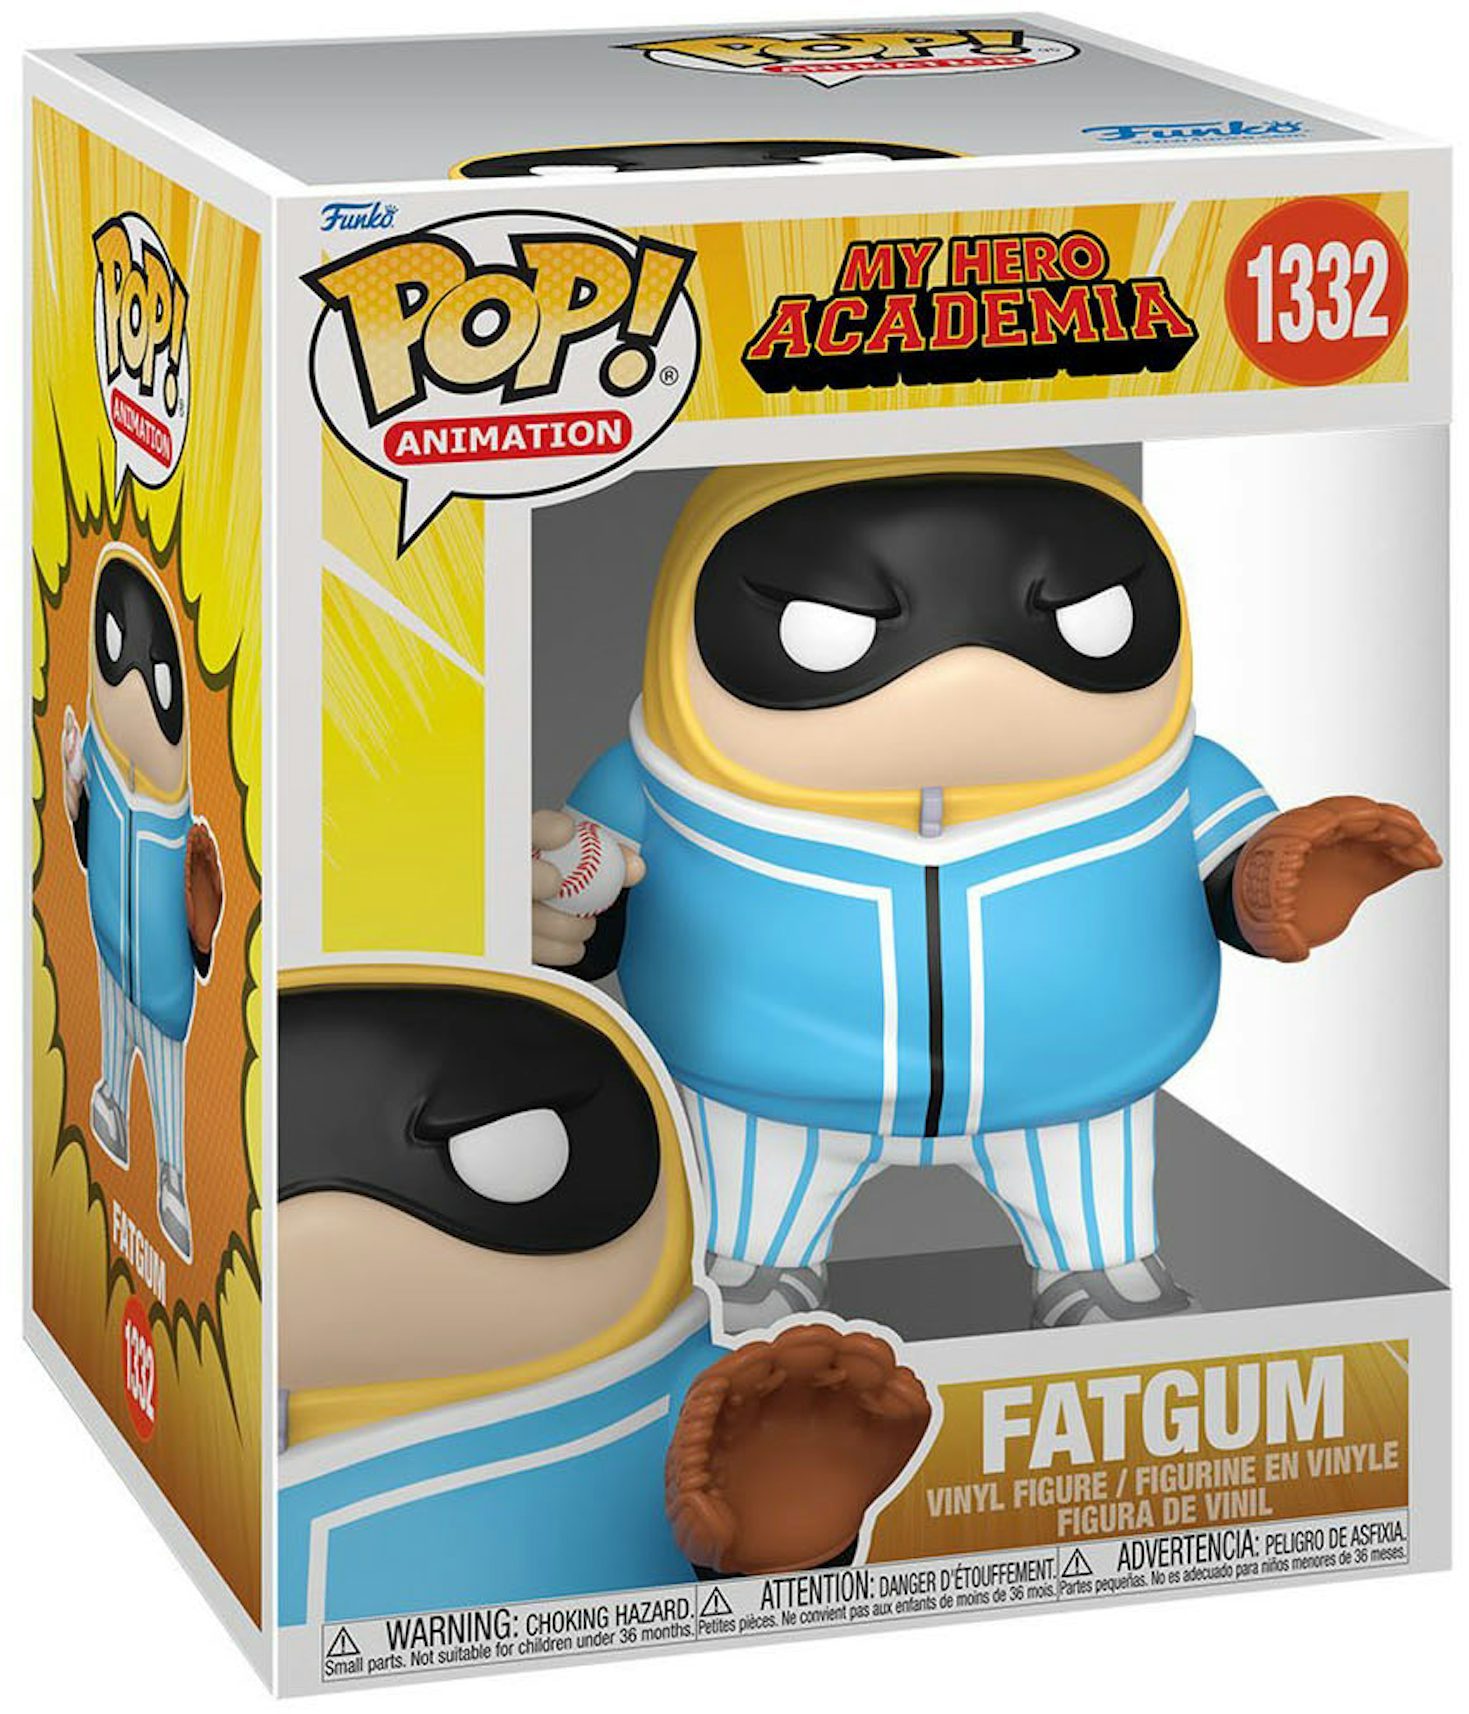 Funko POP! Animation My Hero Academia 6-Inch Fatgum #985 Exclusive 